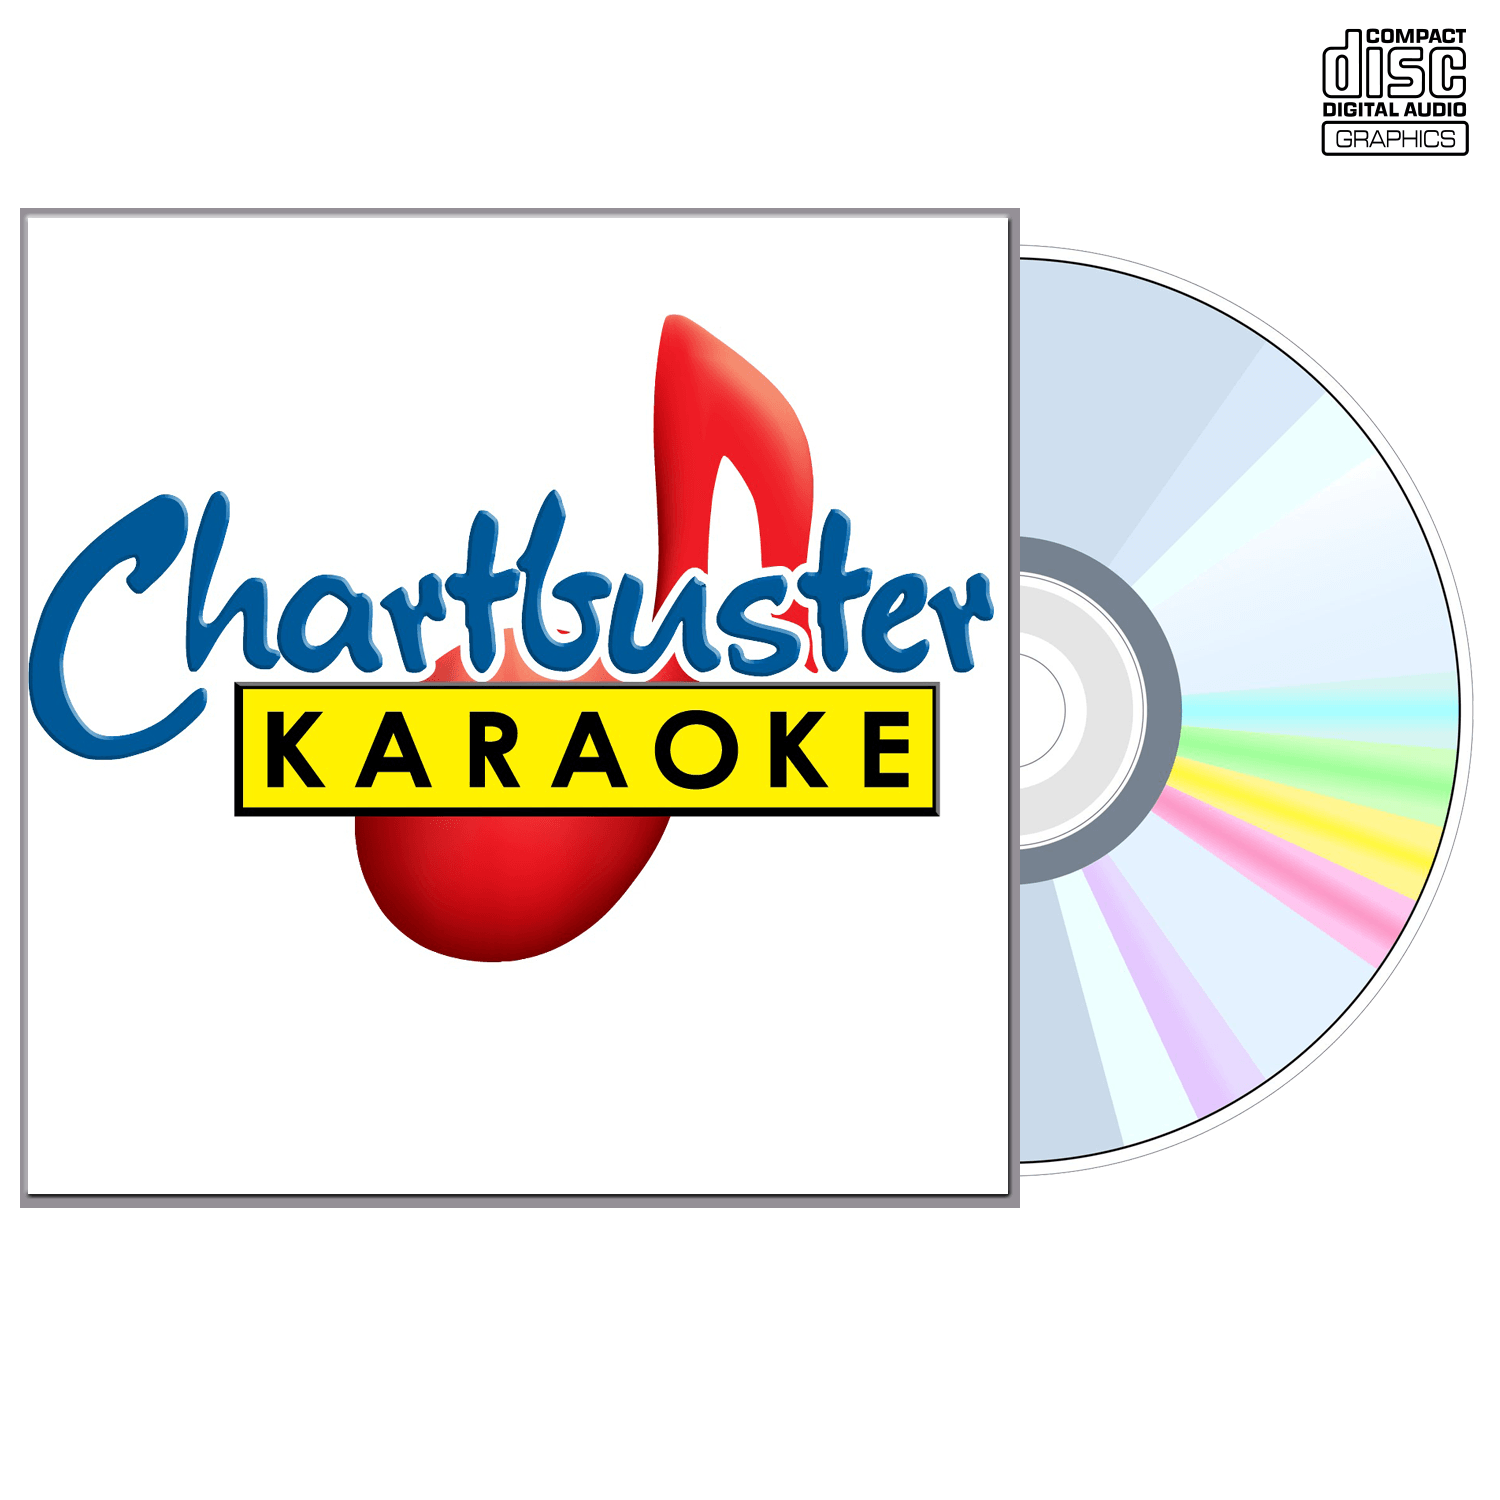 David Bowie - CD+G - Chartbuster Karaoke - Karaoke Home Entertainment